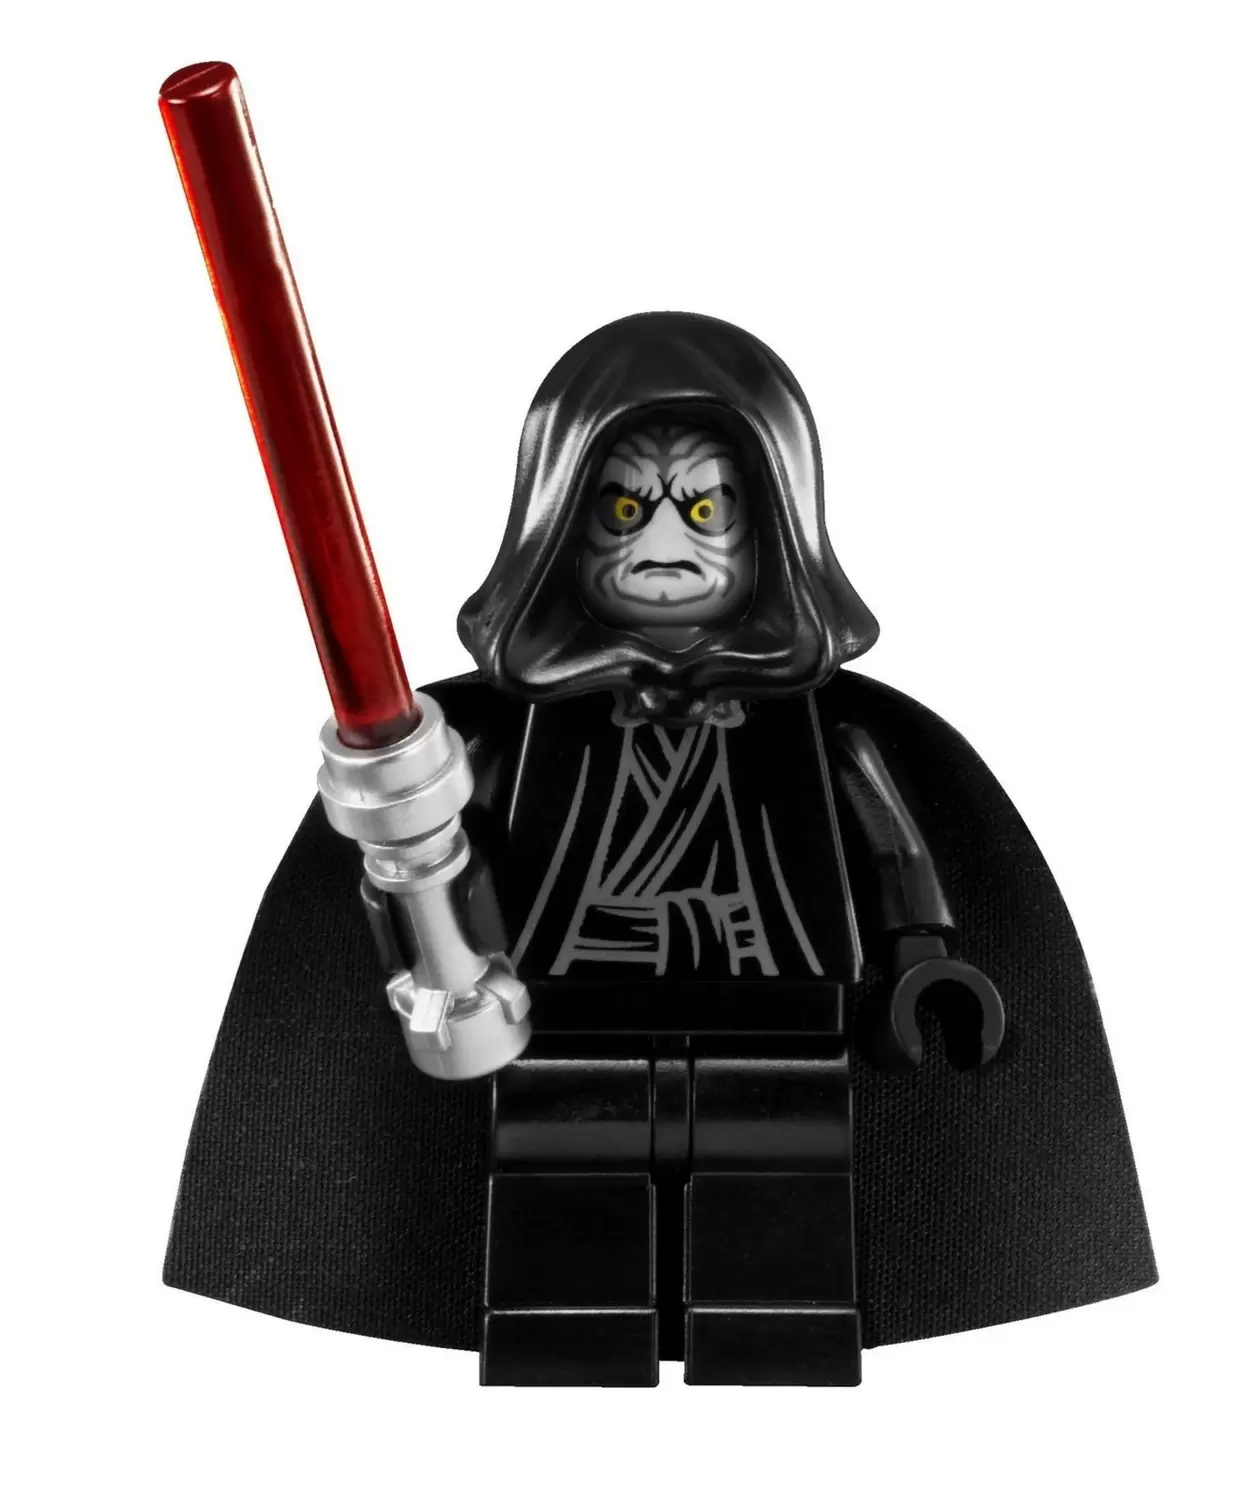 LEGO Star Wars Minifigs - Emperor Palpatine